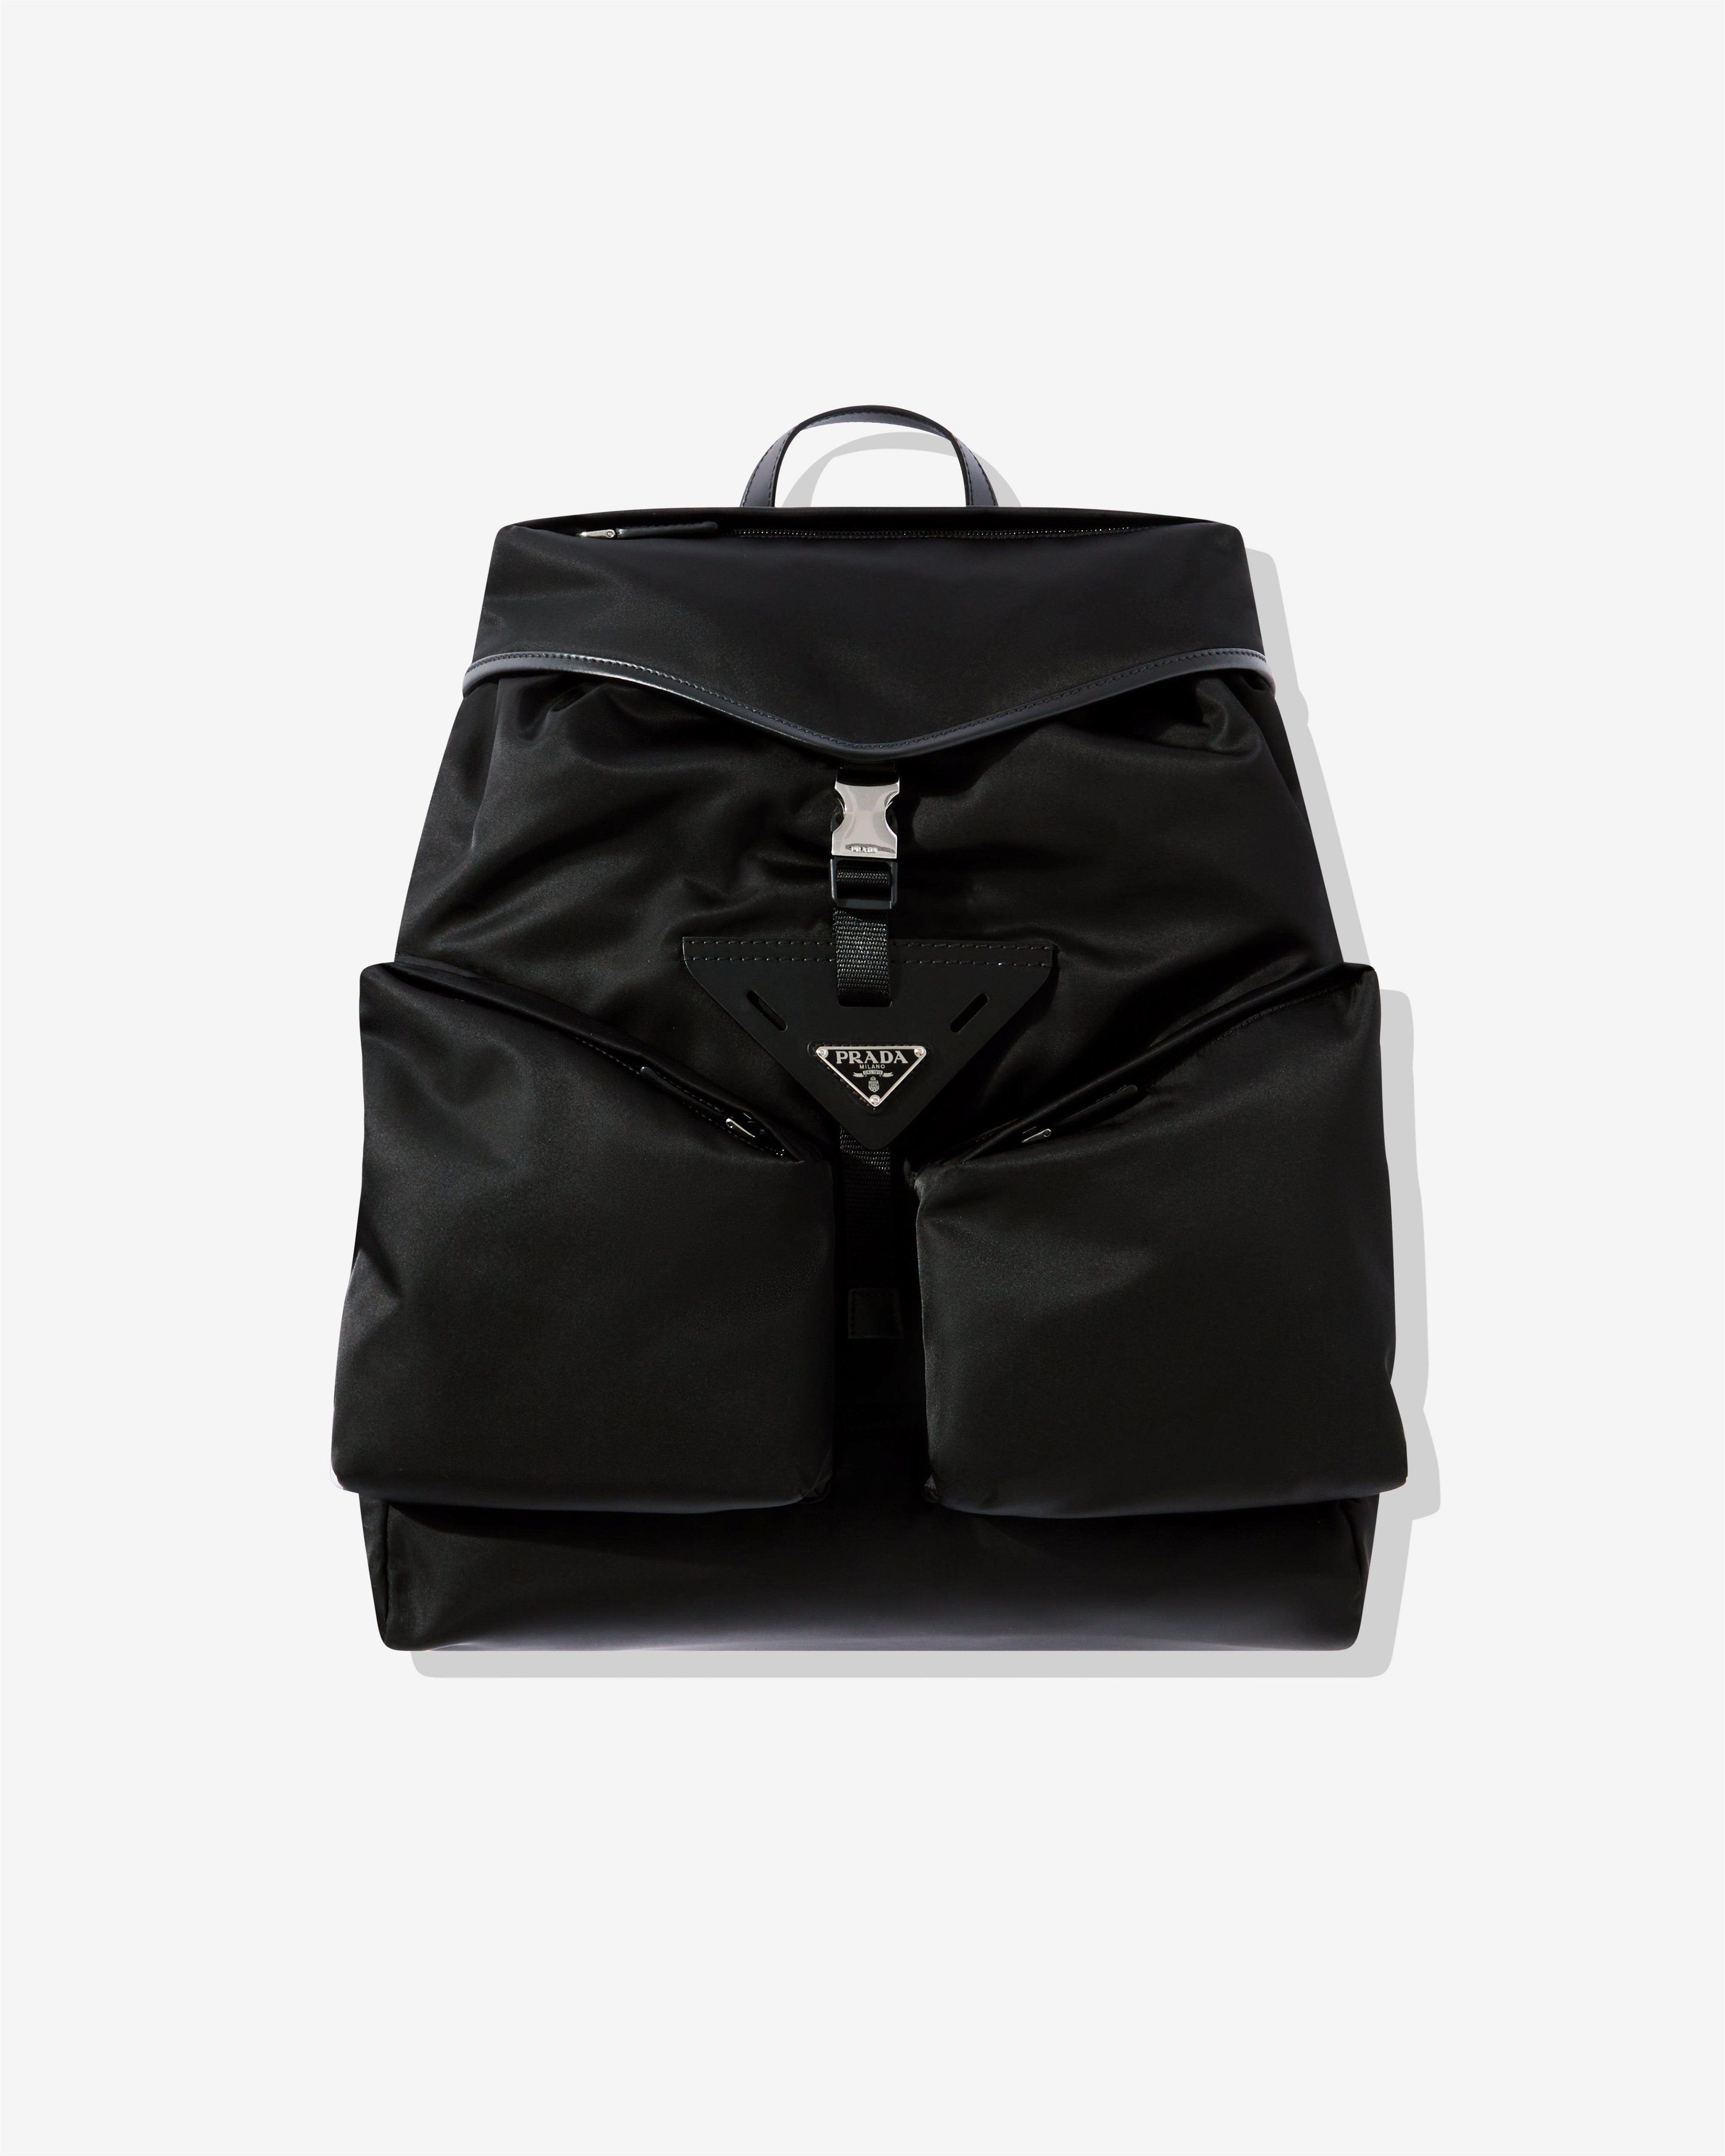 Prada - Re-Nylon and Leather Backpack - (Black) by PRADA